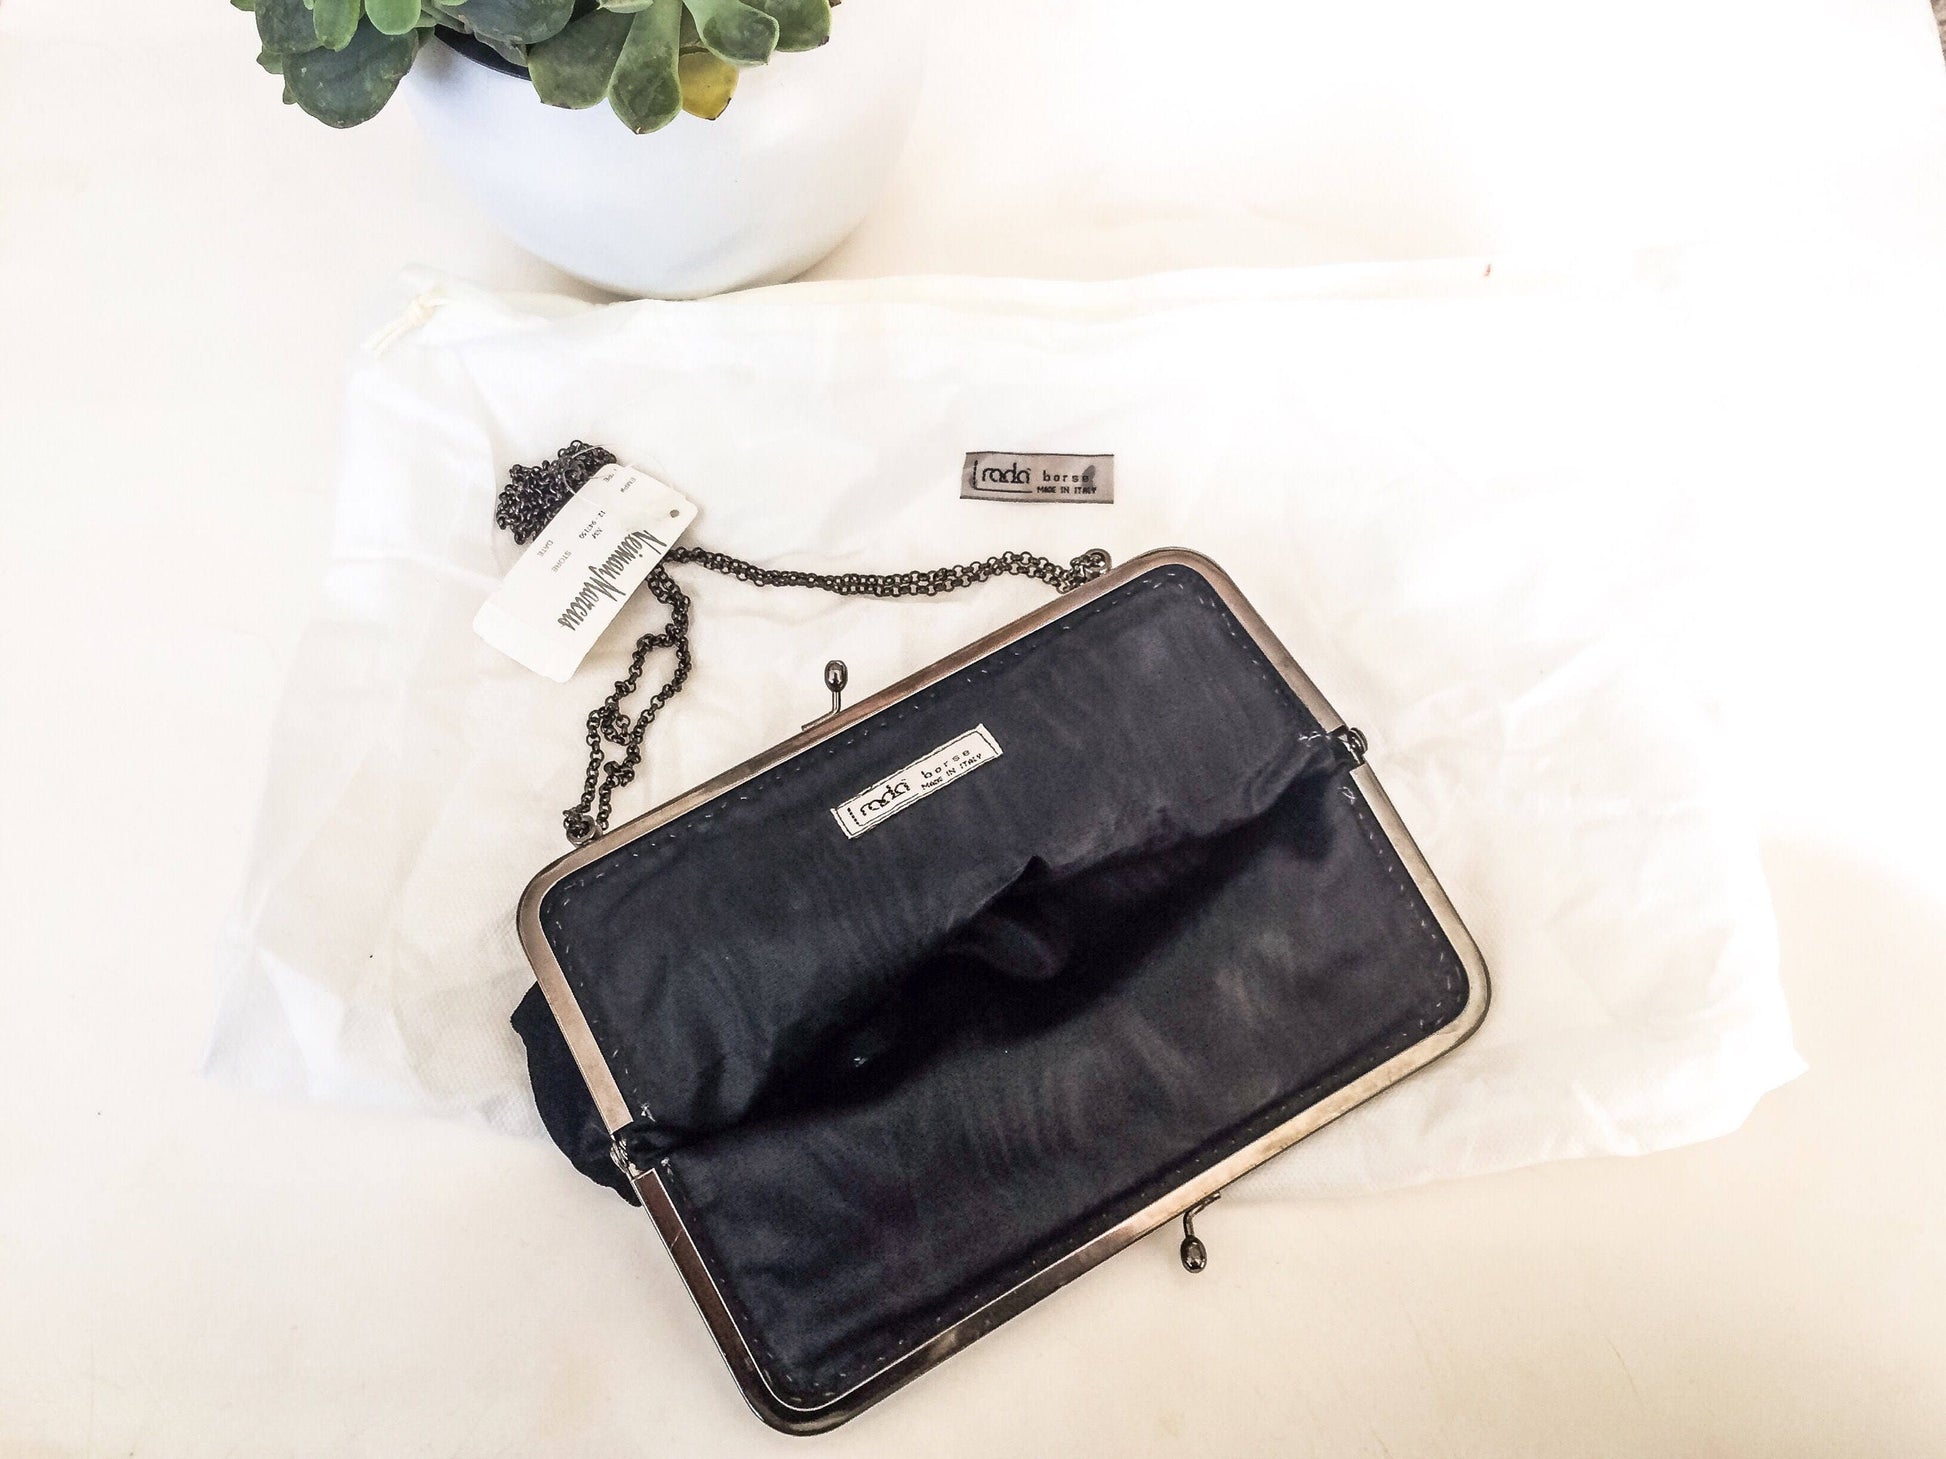 Evening Bags, Evening Handbags & Evening Clutches, Neiman Marcus